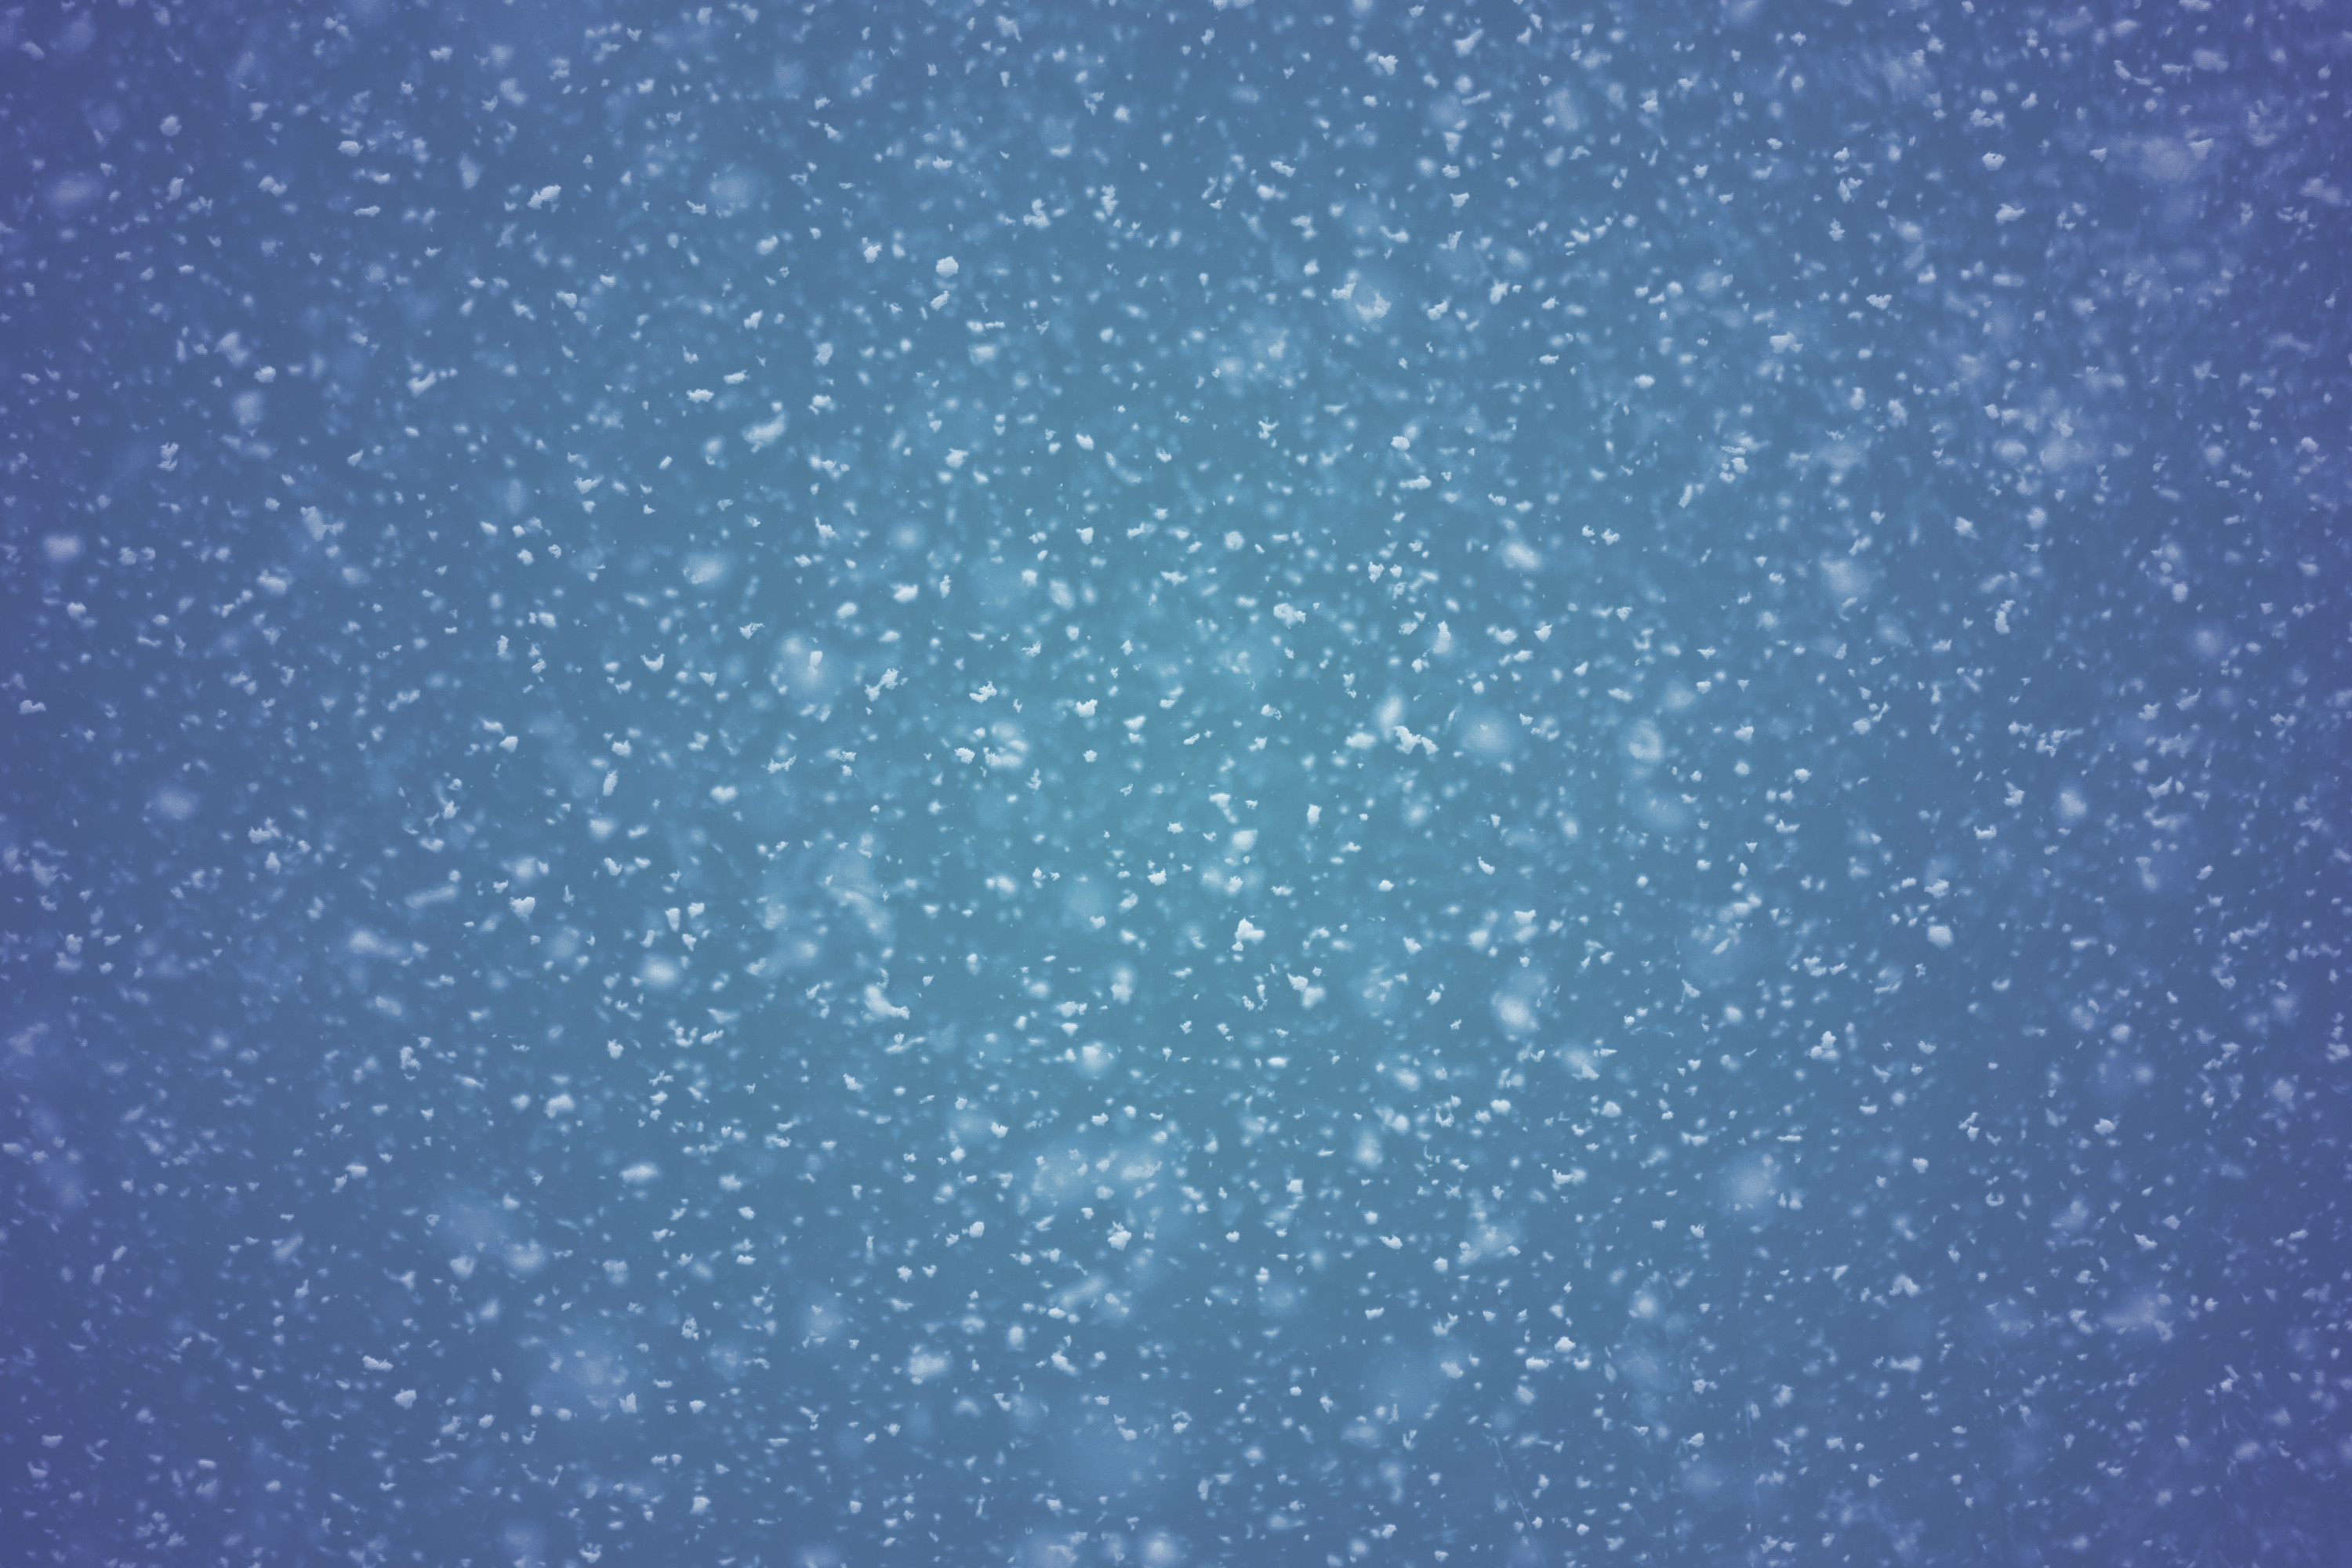 3000x2000 falling snow wallpaper 2015 - Grasscloth Wallpaper